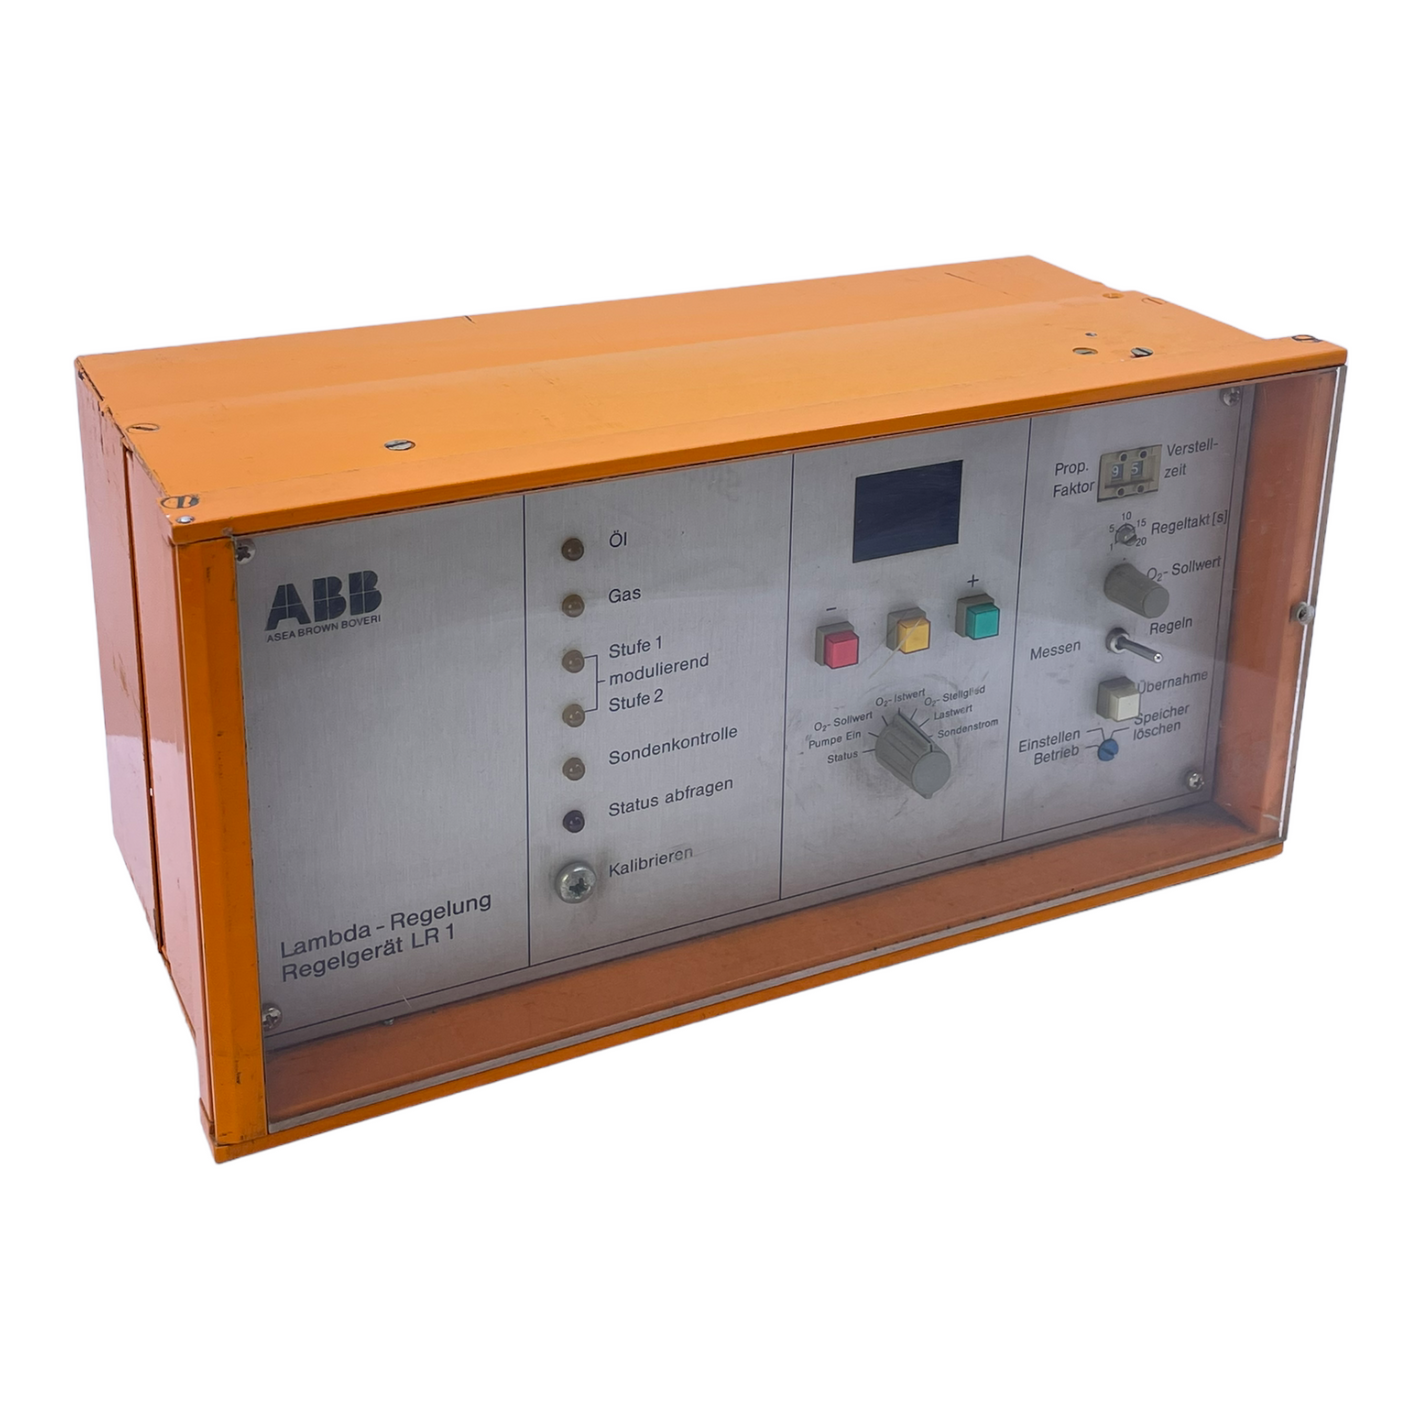 ABB LR1 Lambda controller GZAH018651R2 for industrial use controller